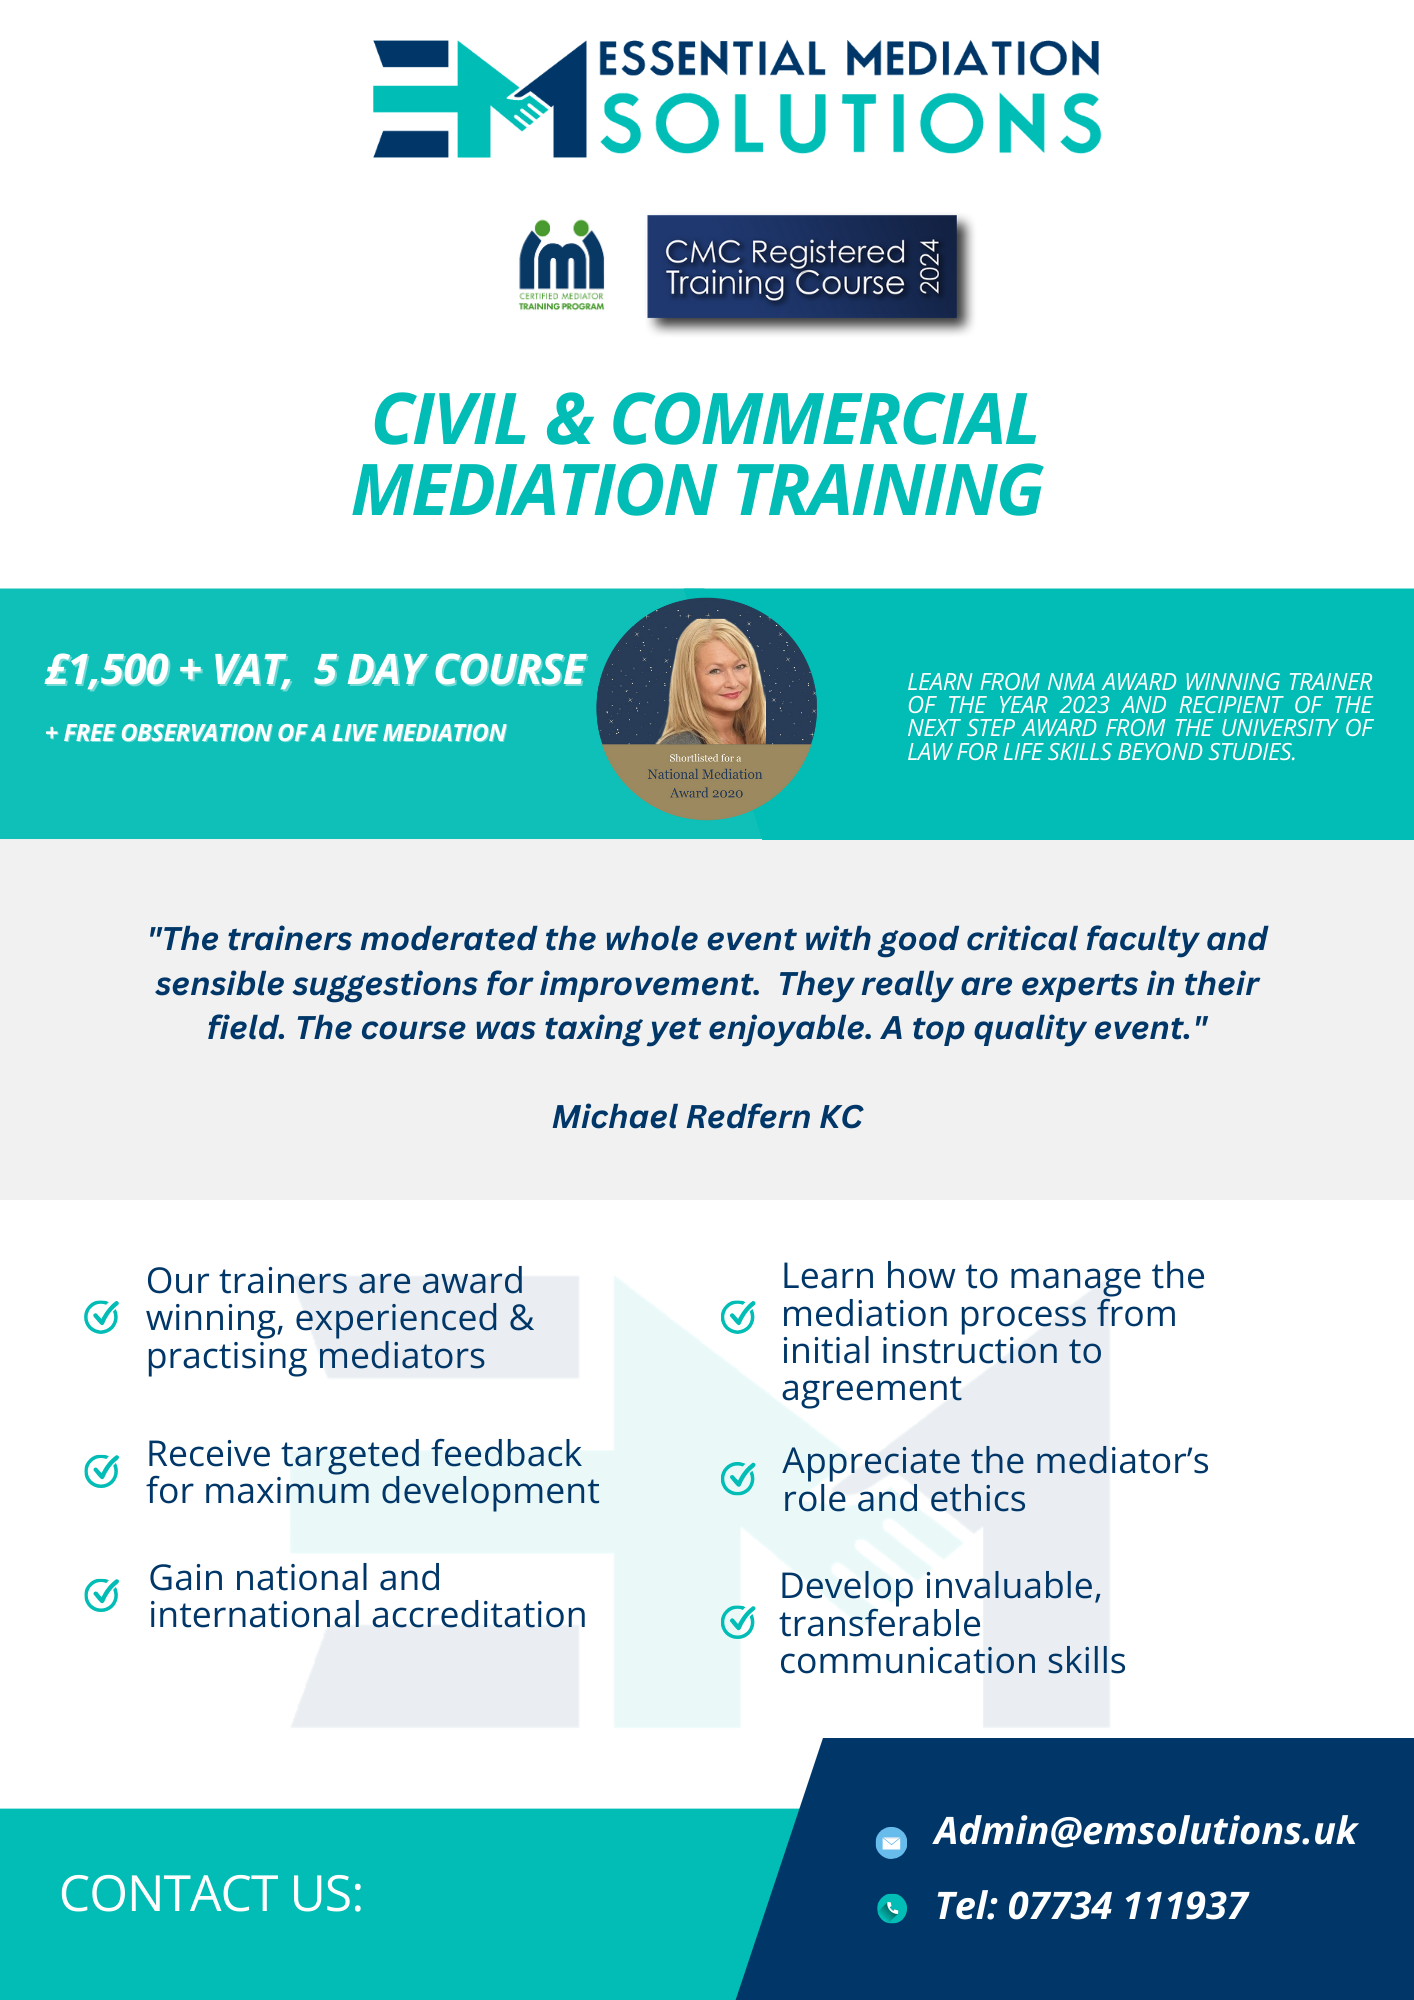 5 day online training for EMS Mediator Certification